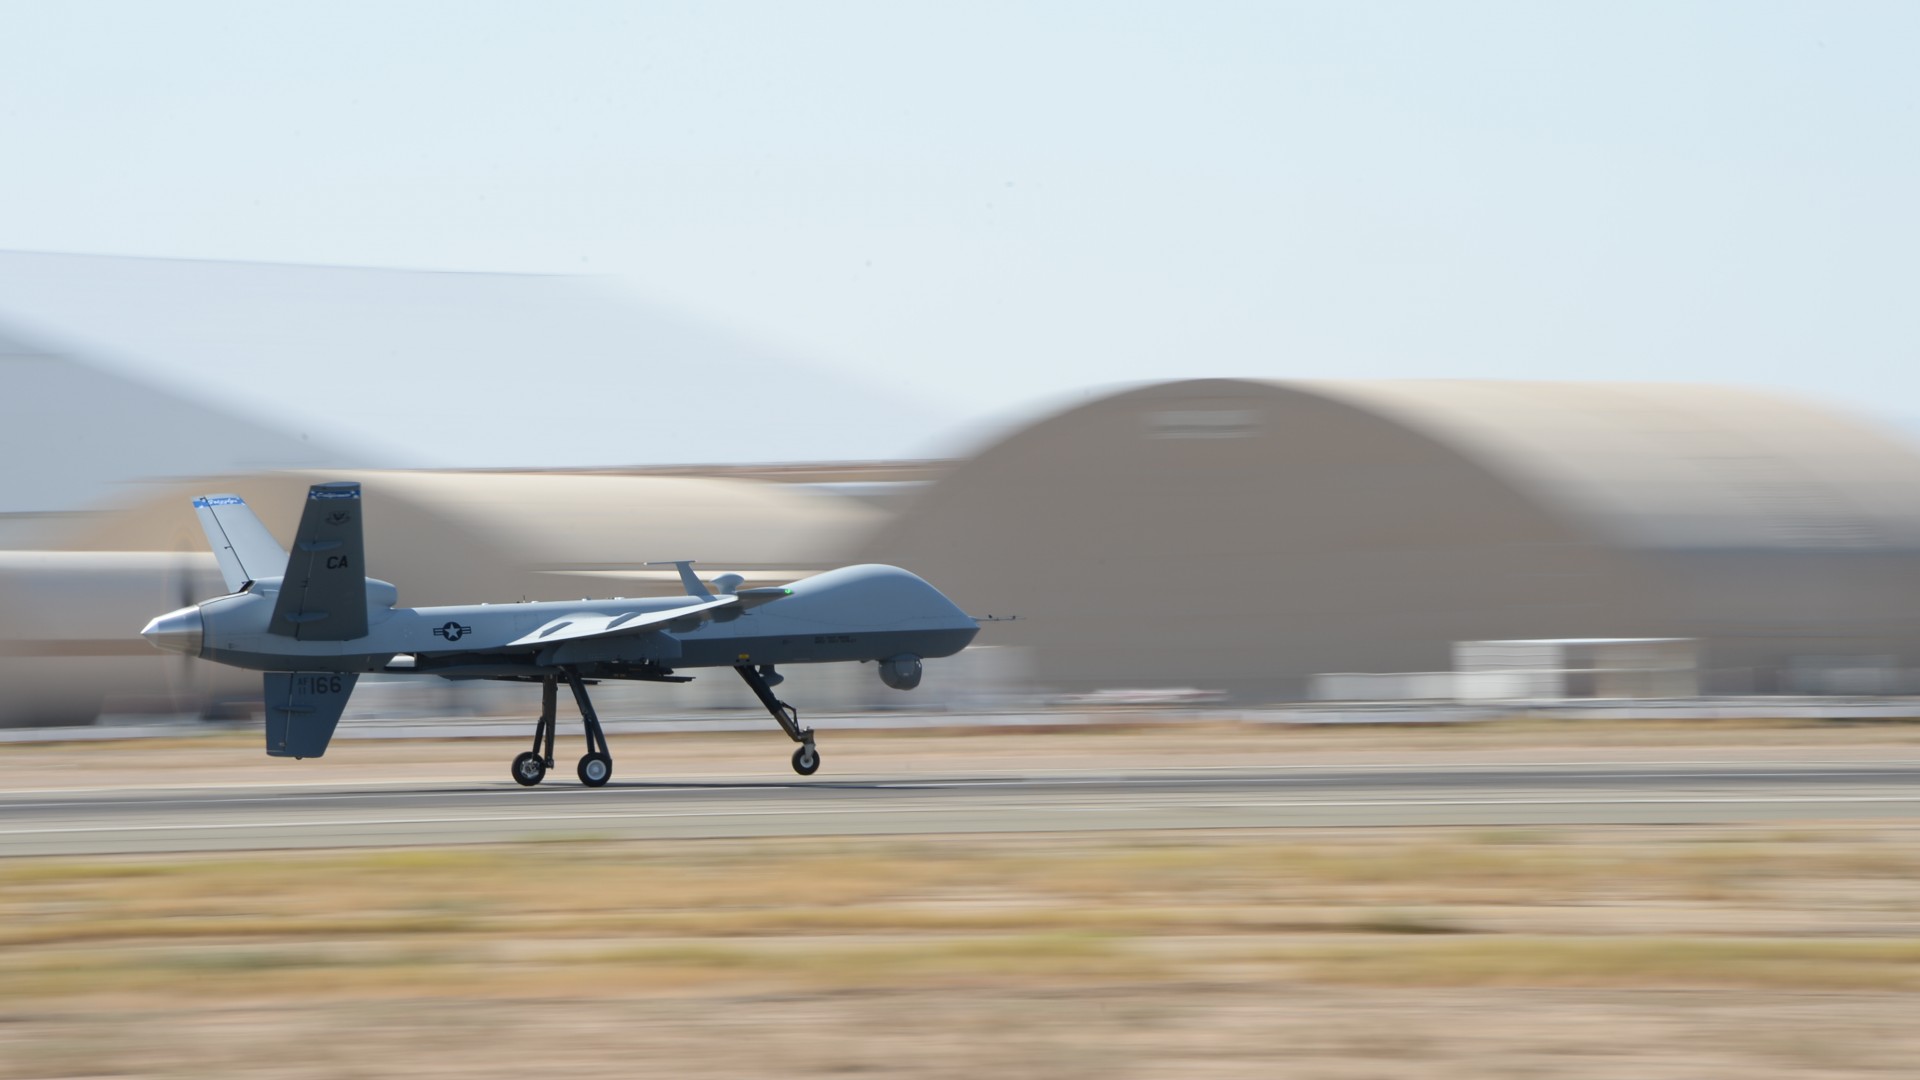 MQ-9 Reaper, MQ-9, drone, Combat, USA Army, landing (horizontal)